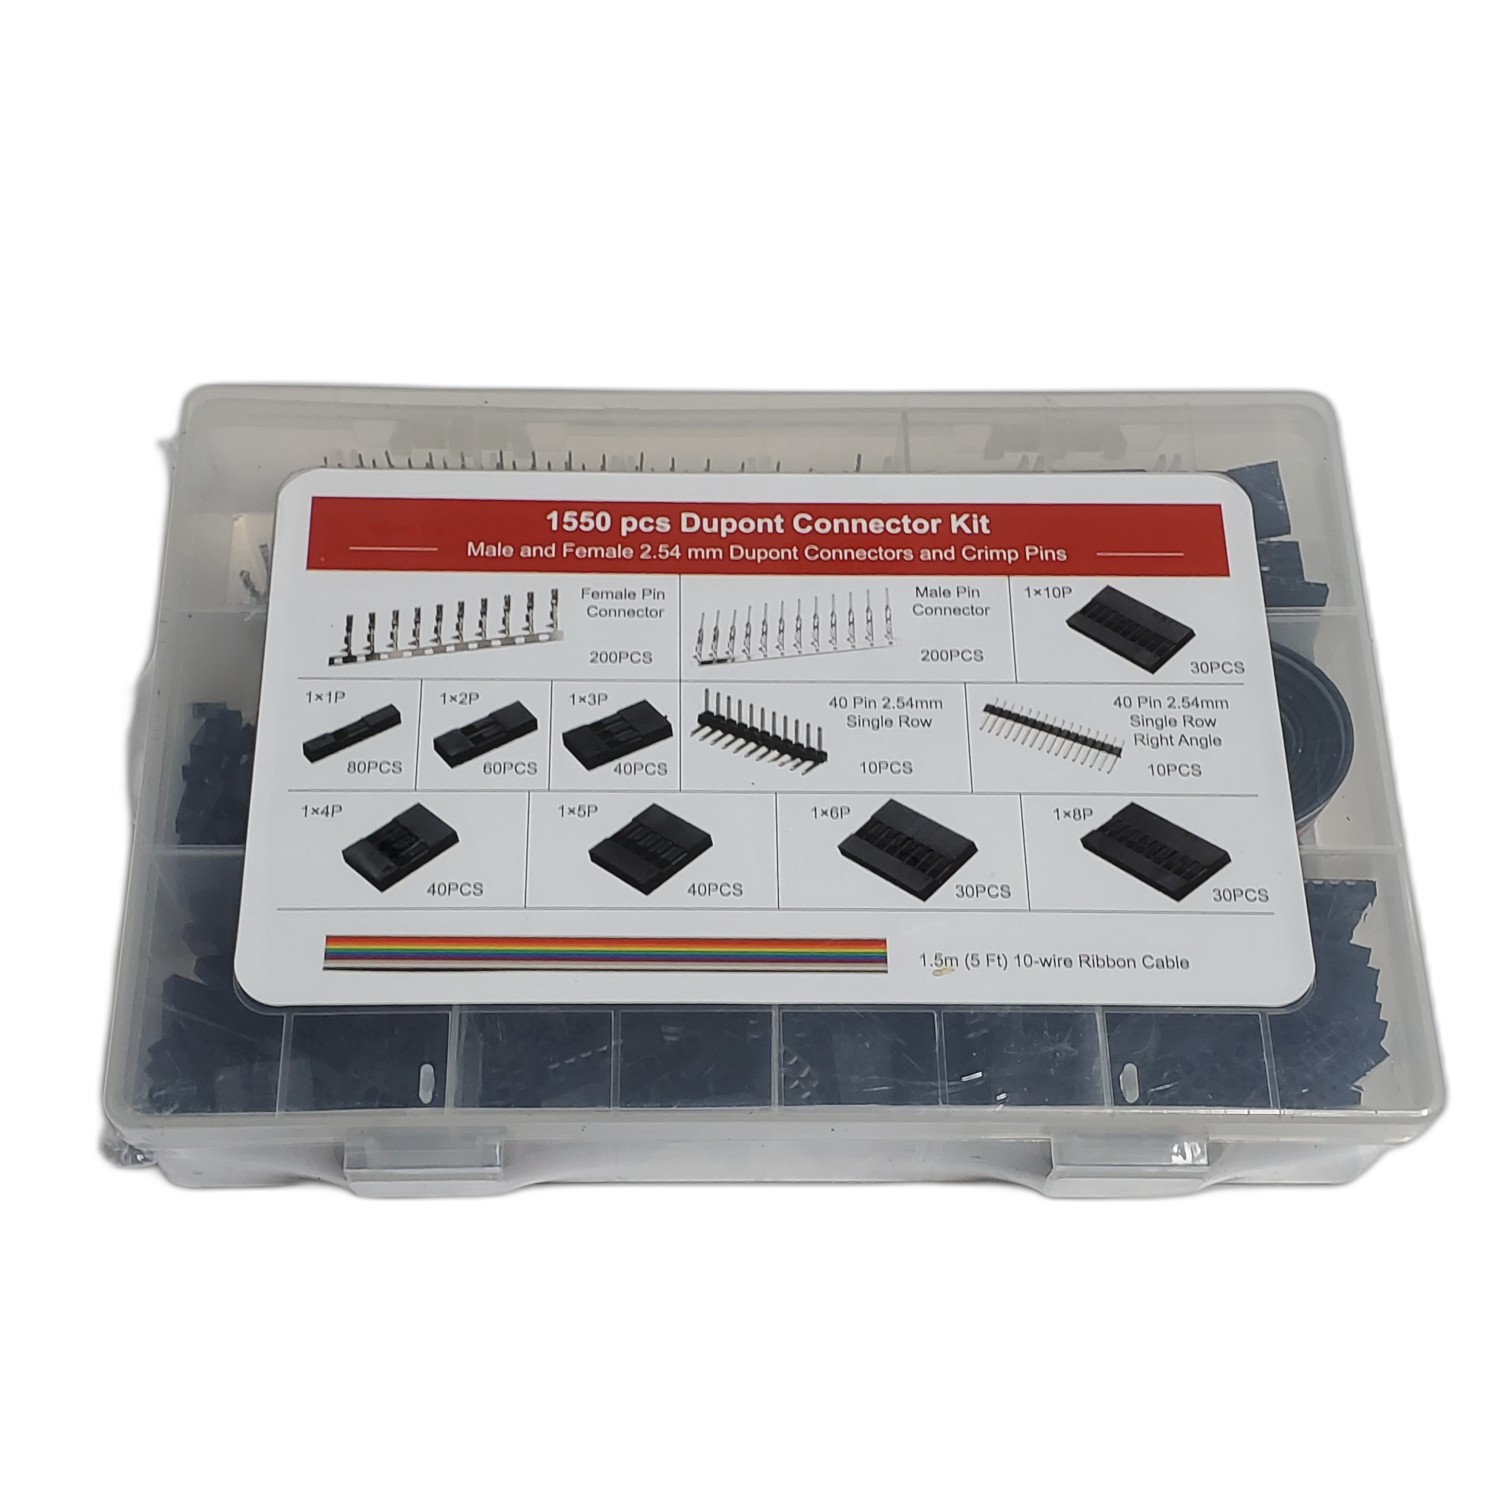 1550 pcs DuPont Connector Kit with Crimp Pins – DIY Electronics Project Set